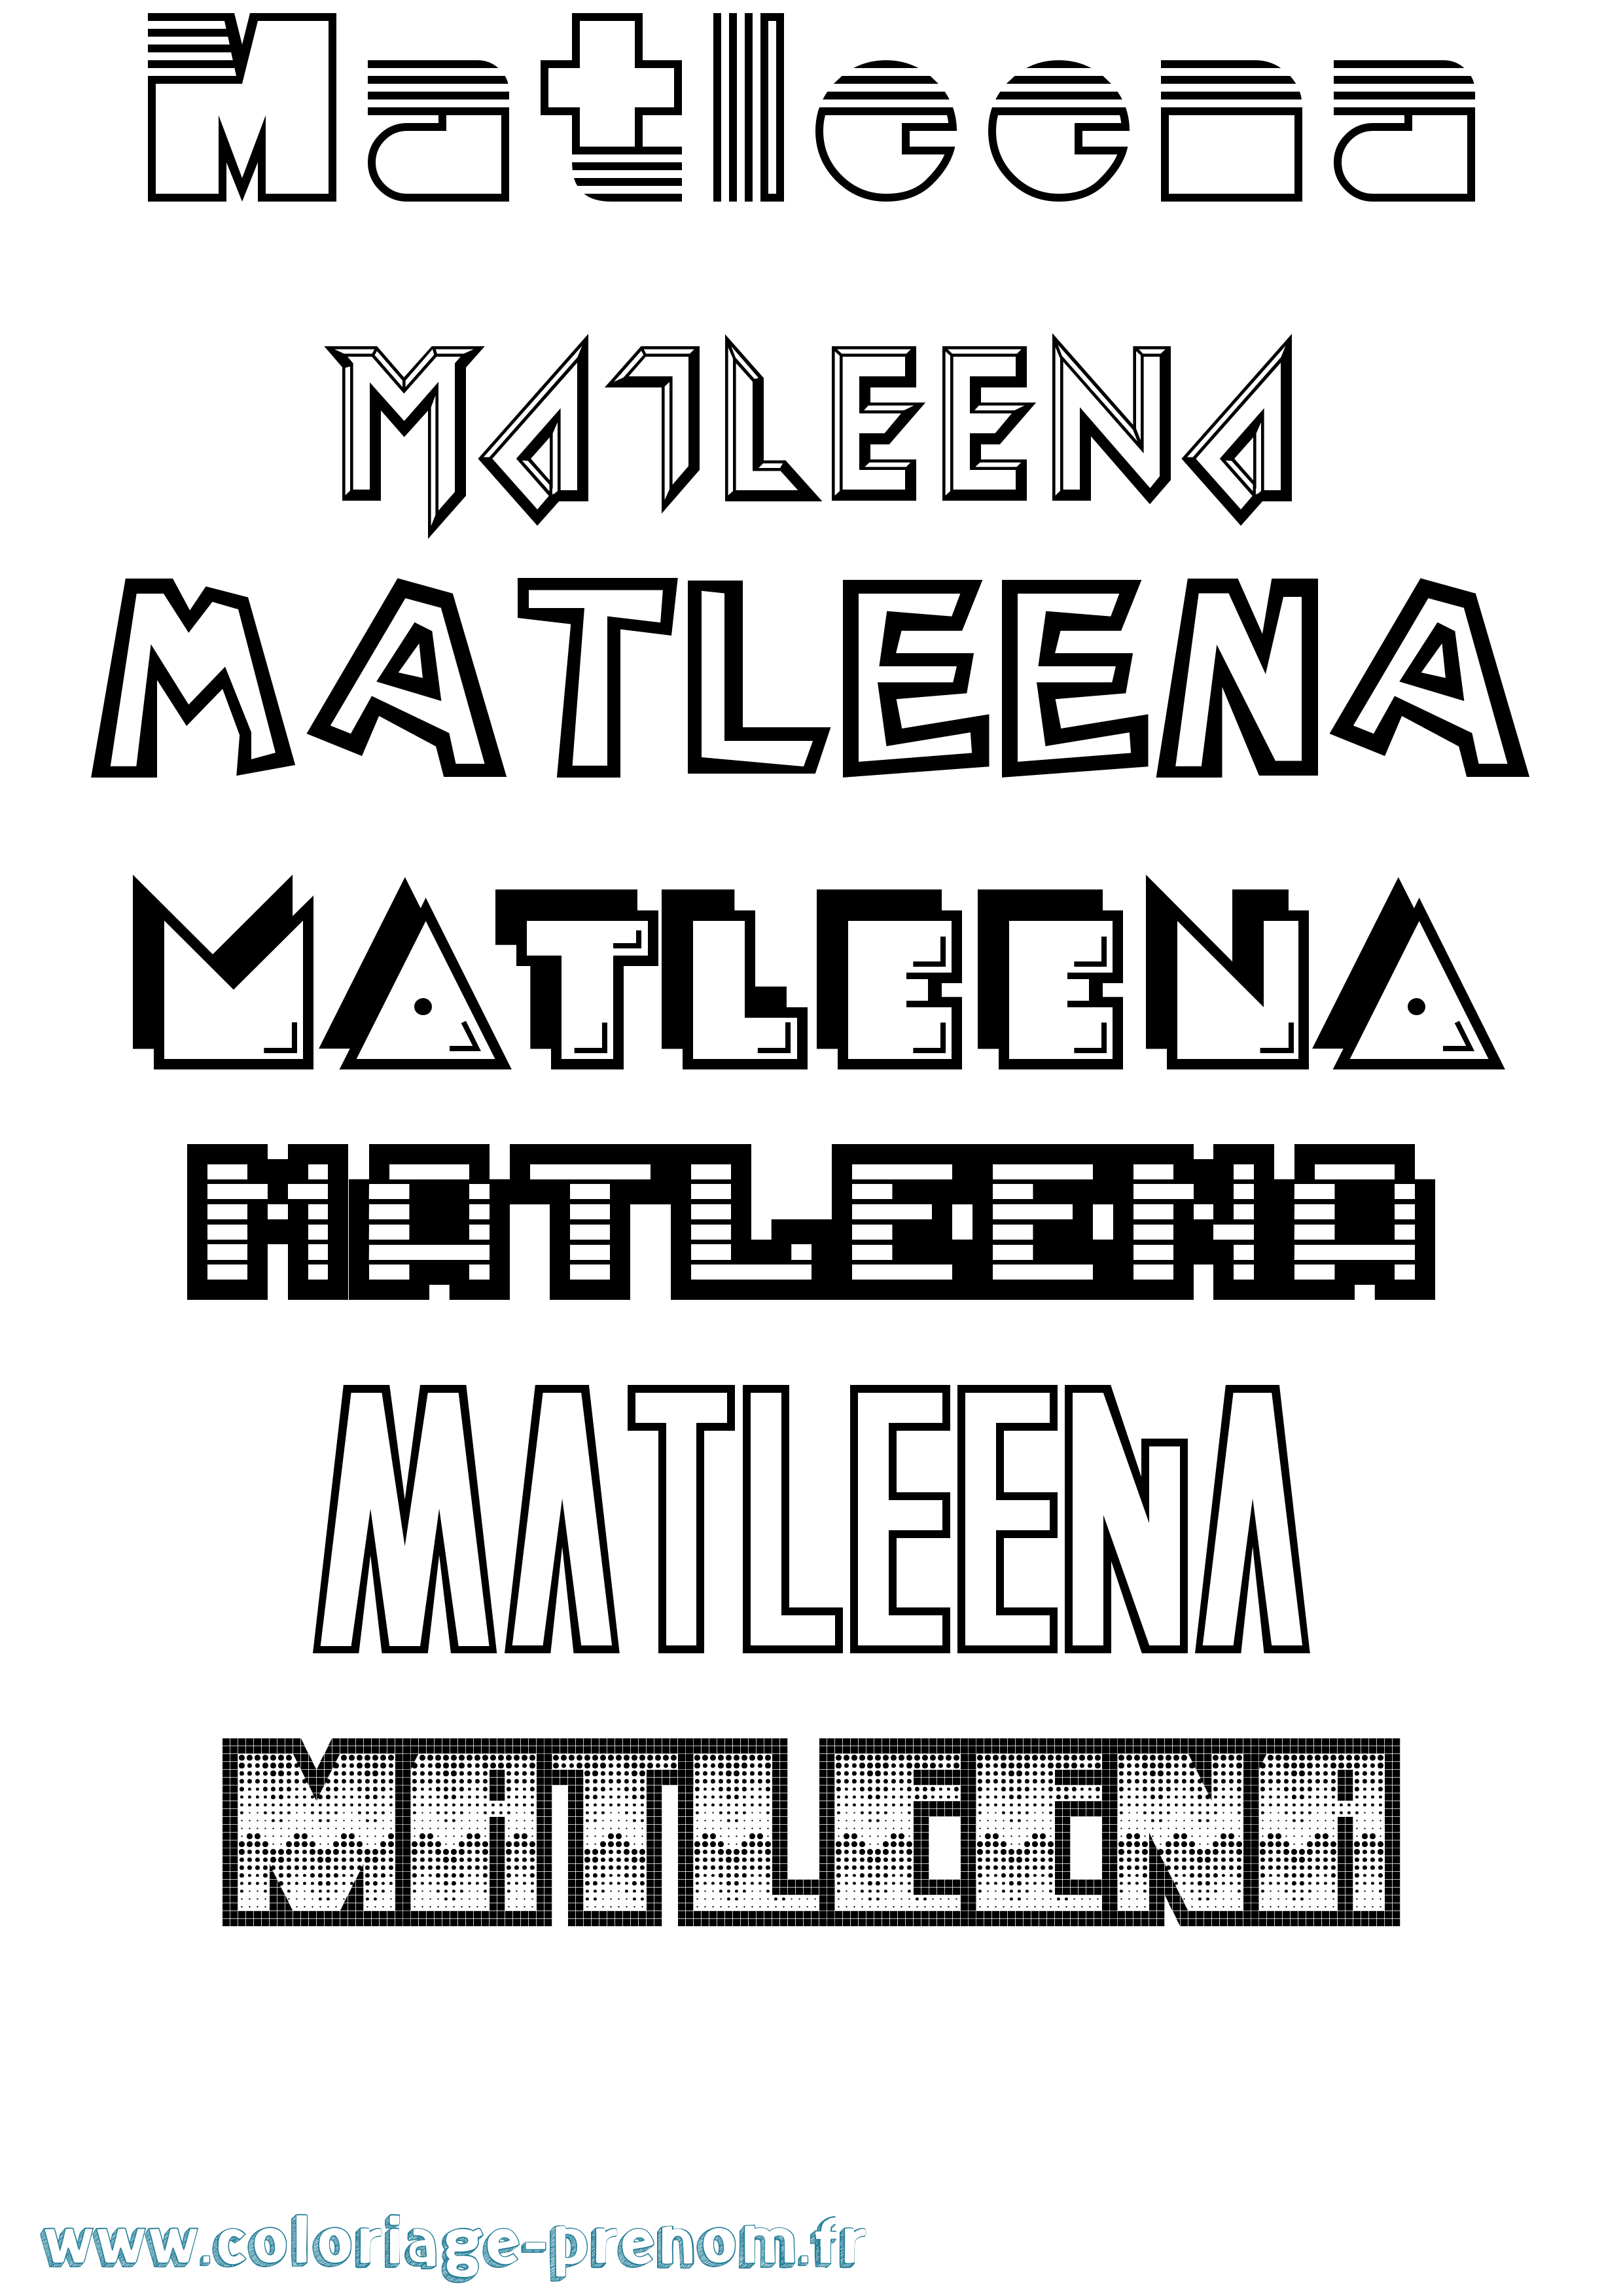 Coloriage prénom Matleena Jeux Vidéos